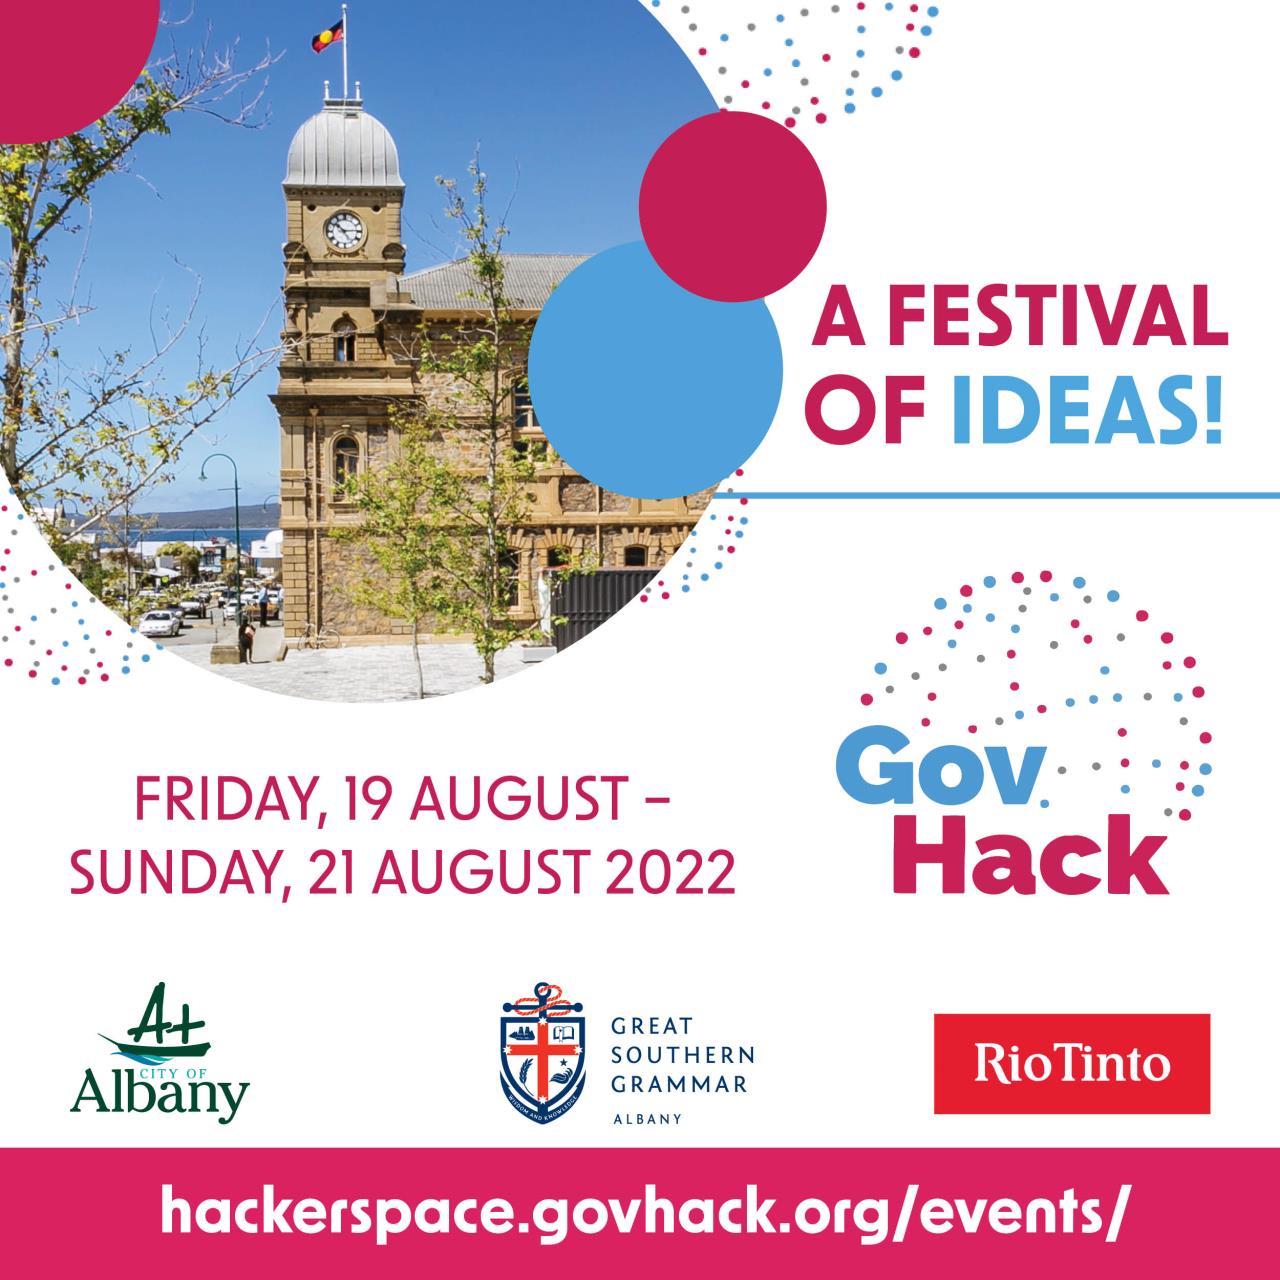 Gov Hack 2022 - A Festival of Ideas